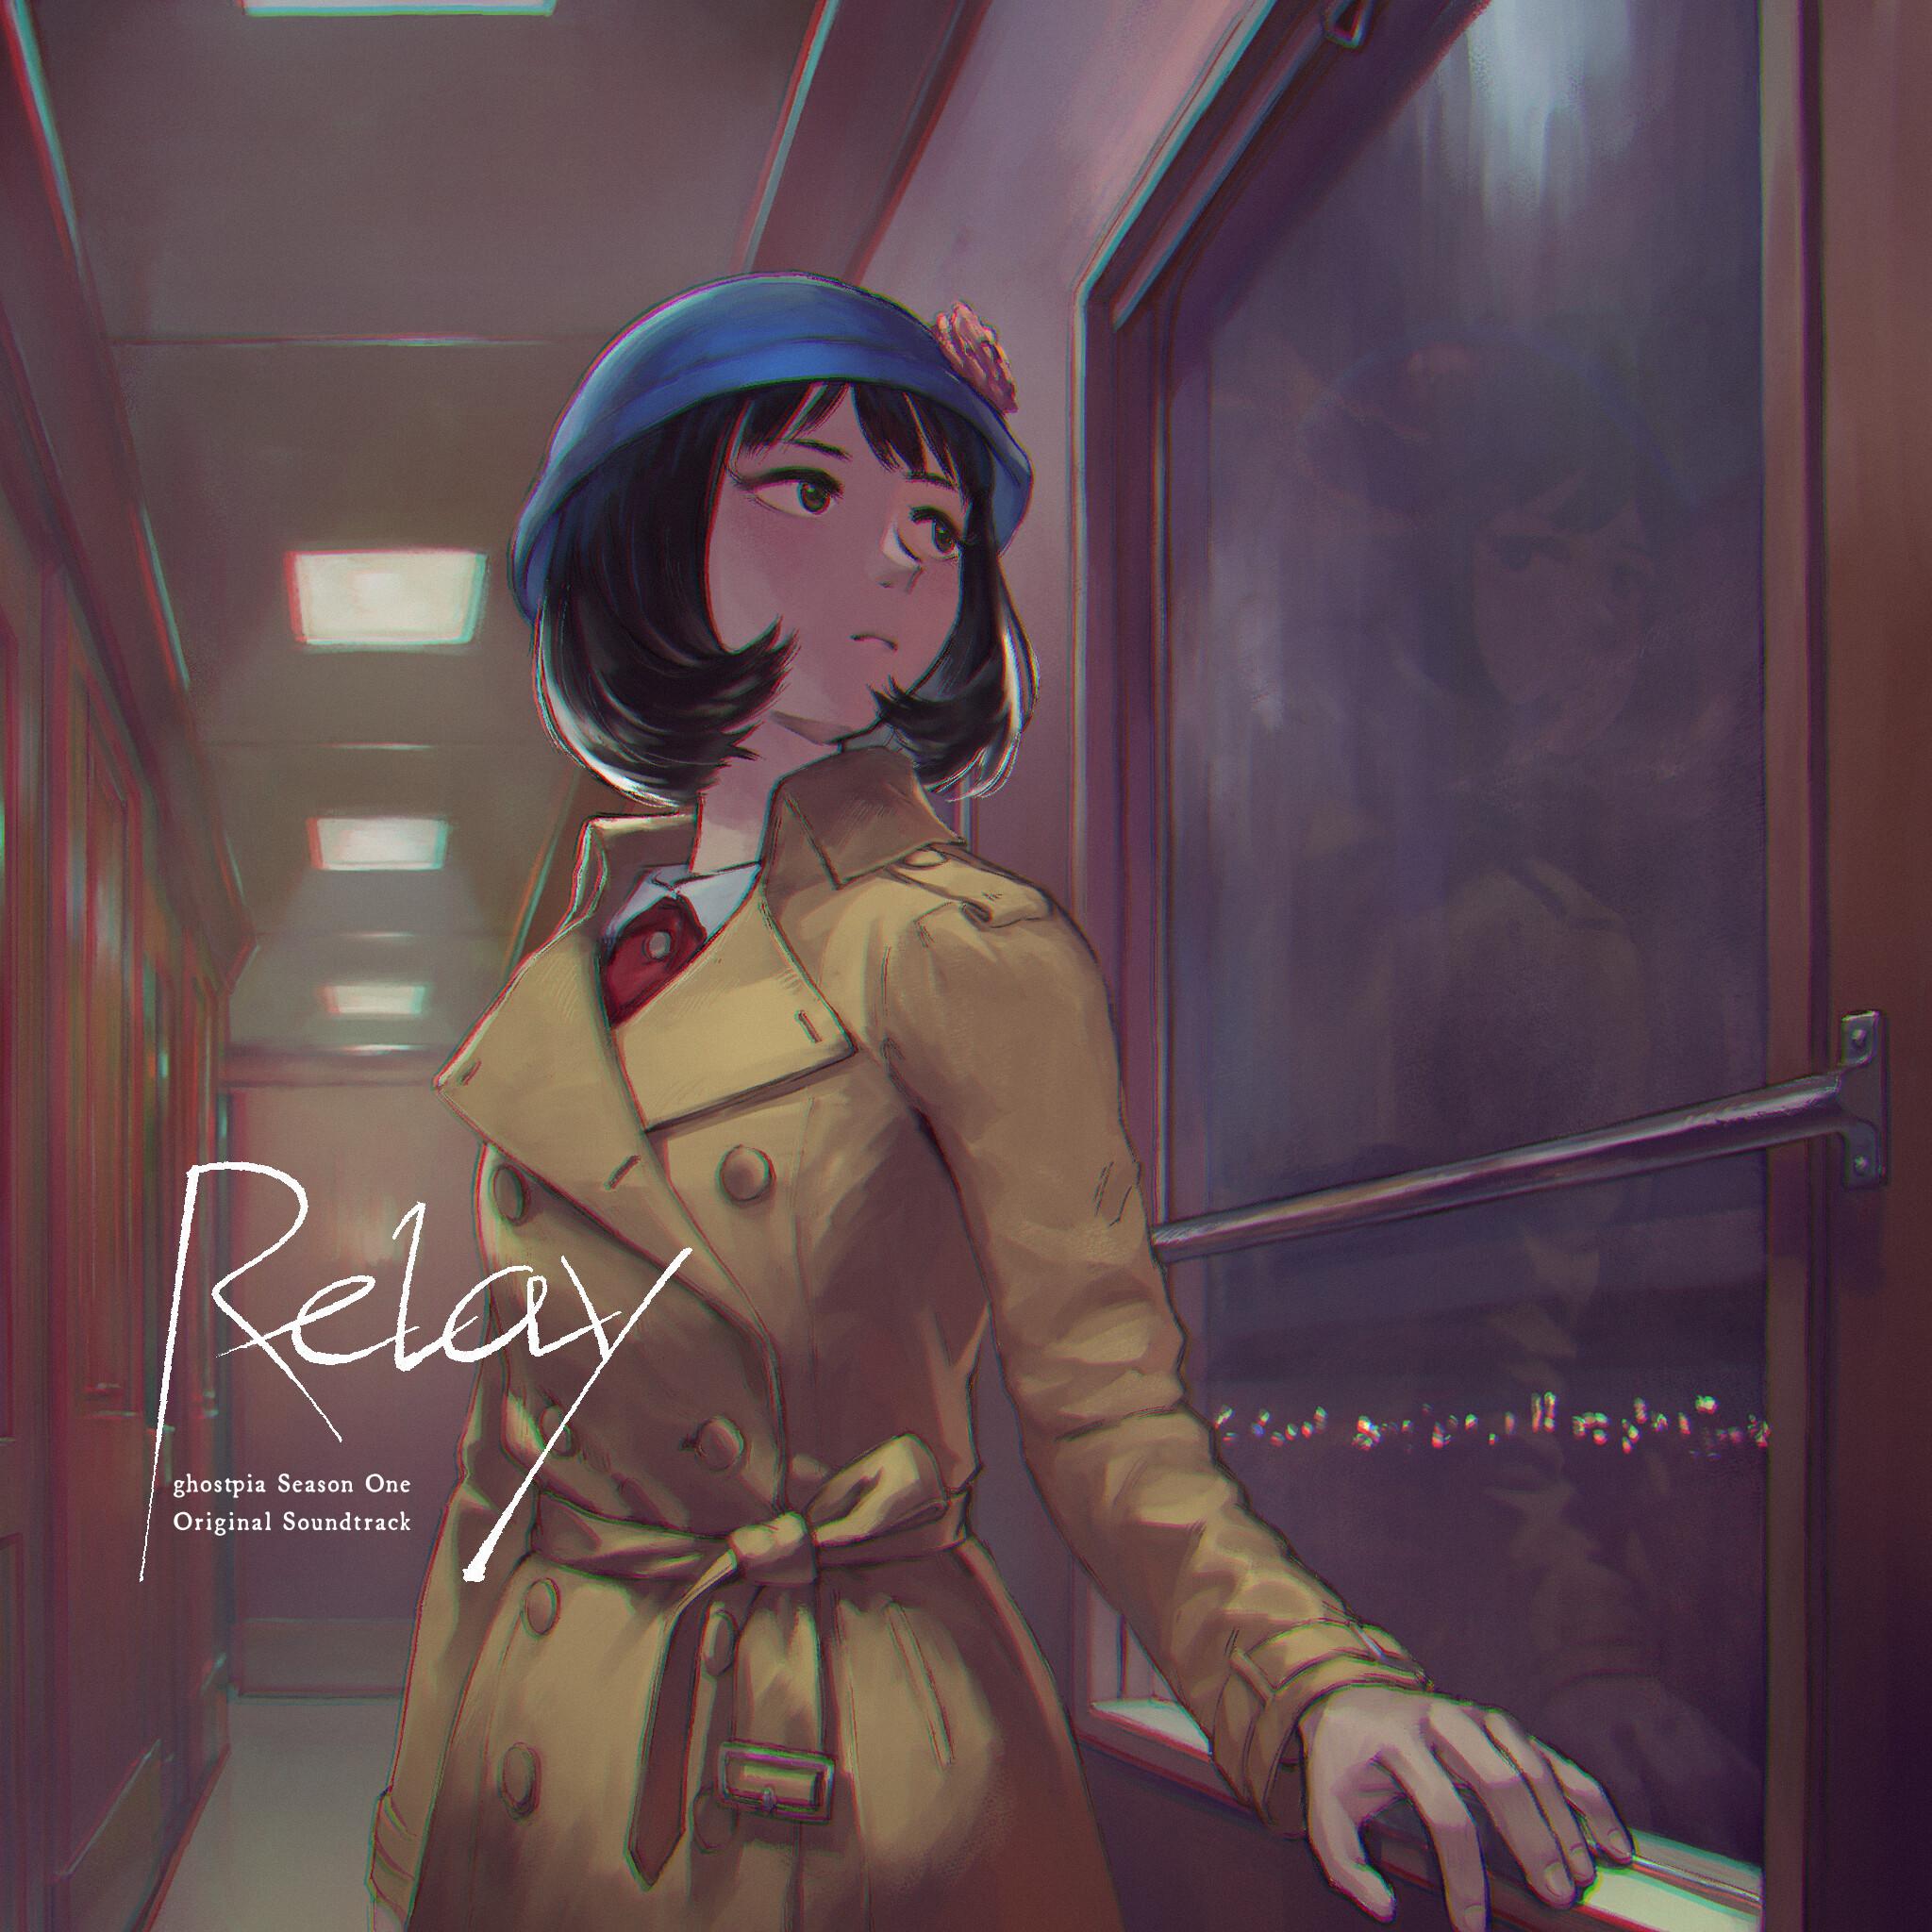 Relay - ghostpia Season One Original Soundtrack